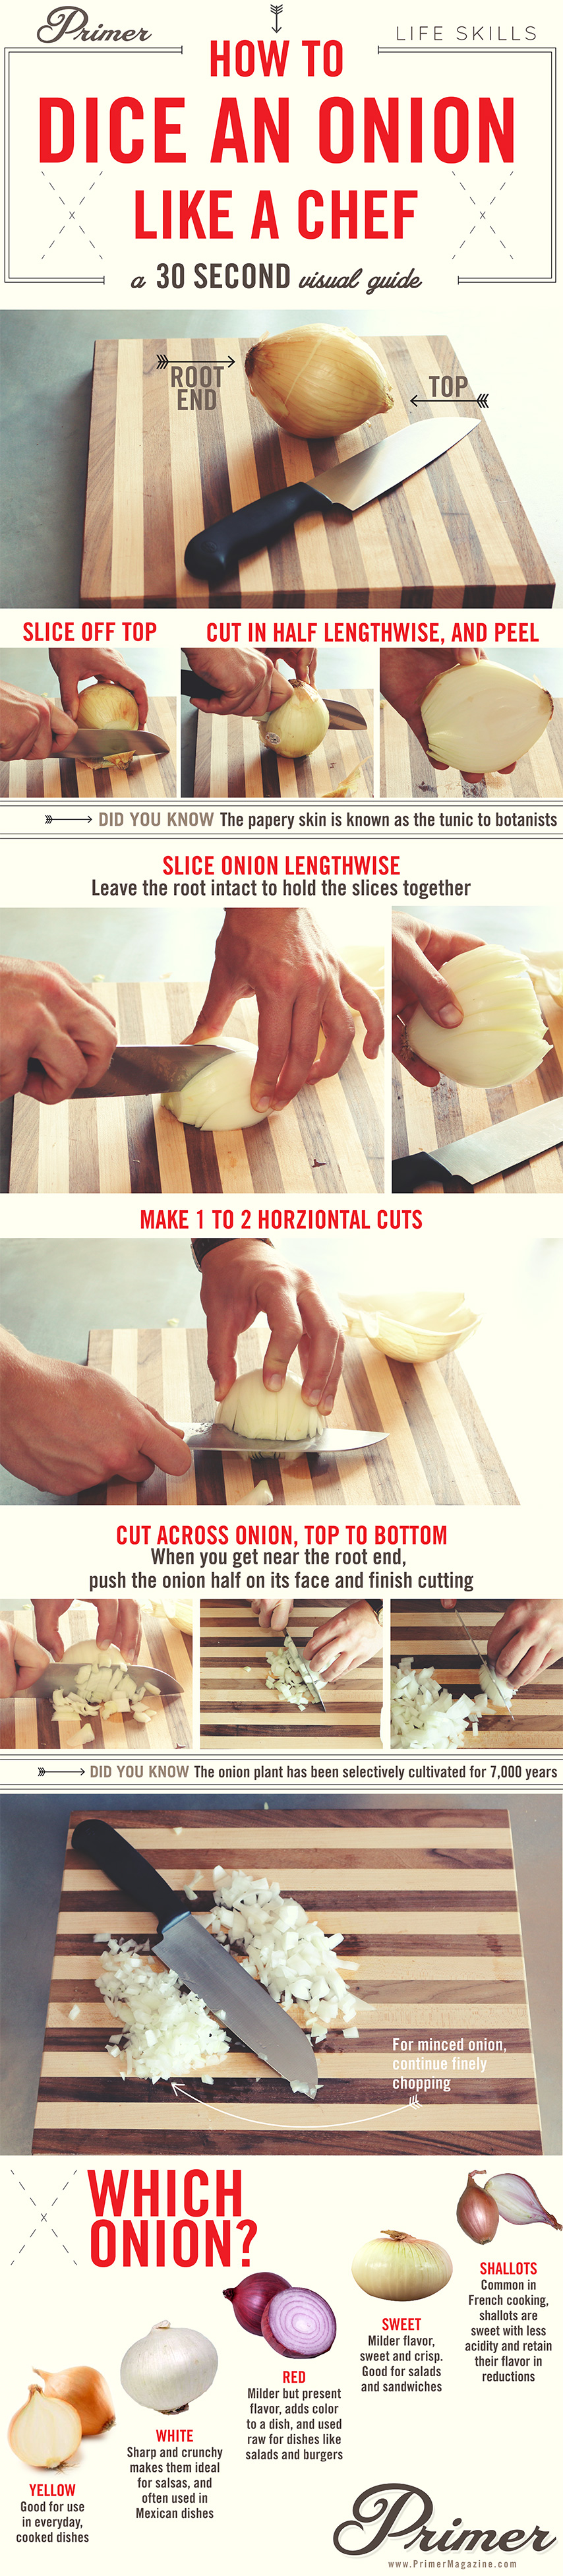 How to dice an onion like a chef